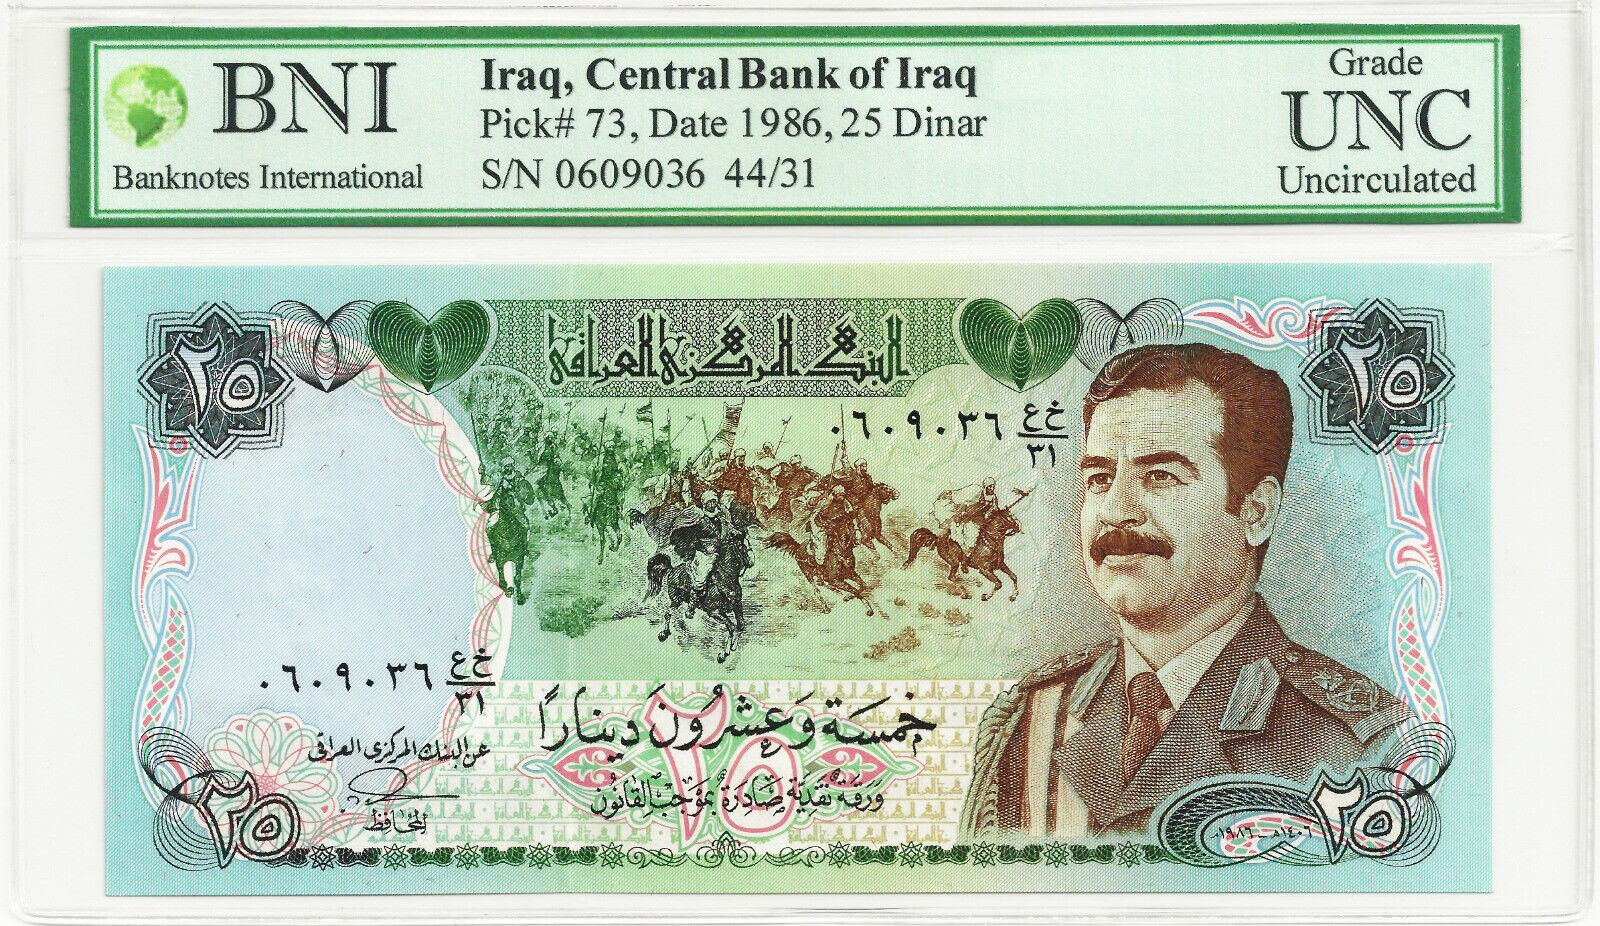 MINT IRAQ SADDAM HUSSEIN 25 DINAR 1986 AUTHENTICATED UNC P 73 BANKNOTE